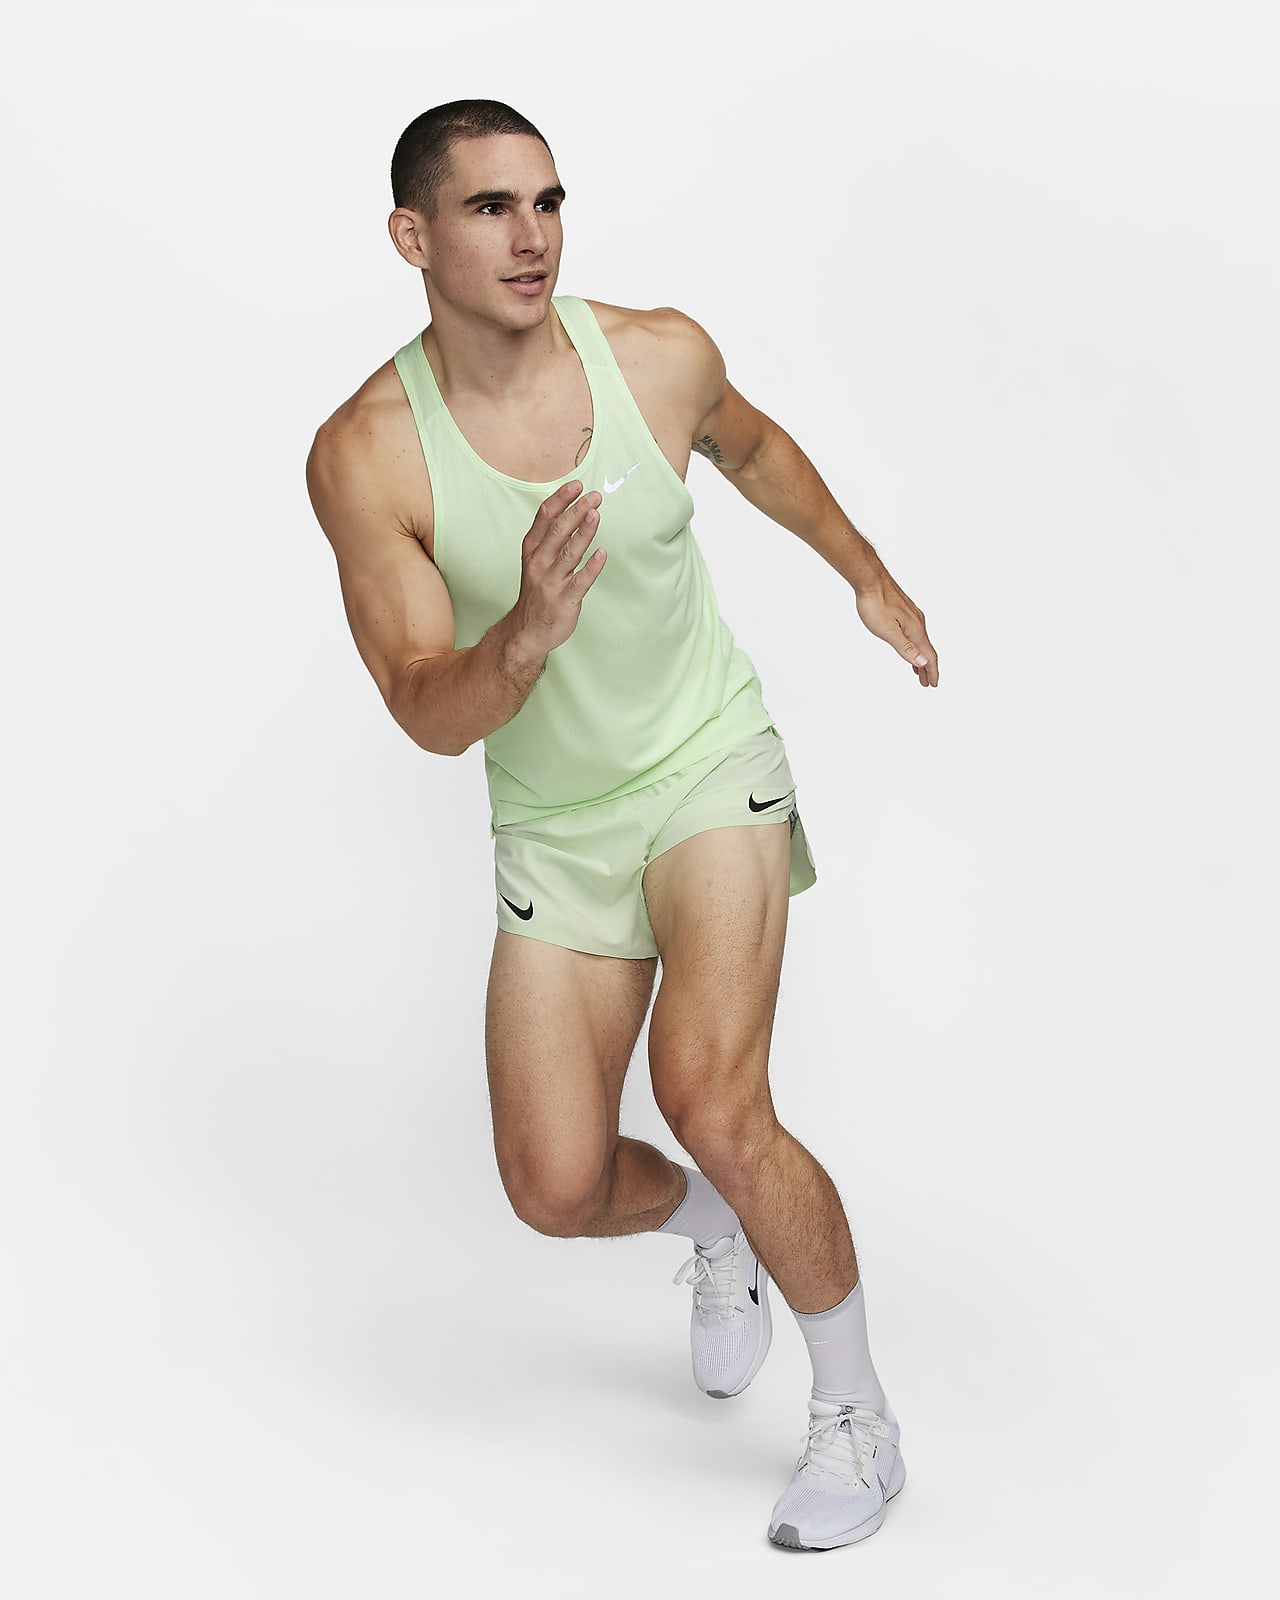 Nike, AeroSwift shorts herre, Herreklær, Svart